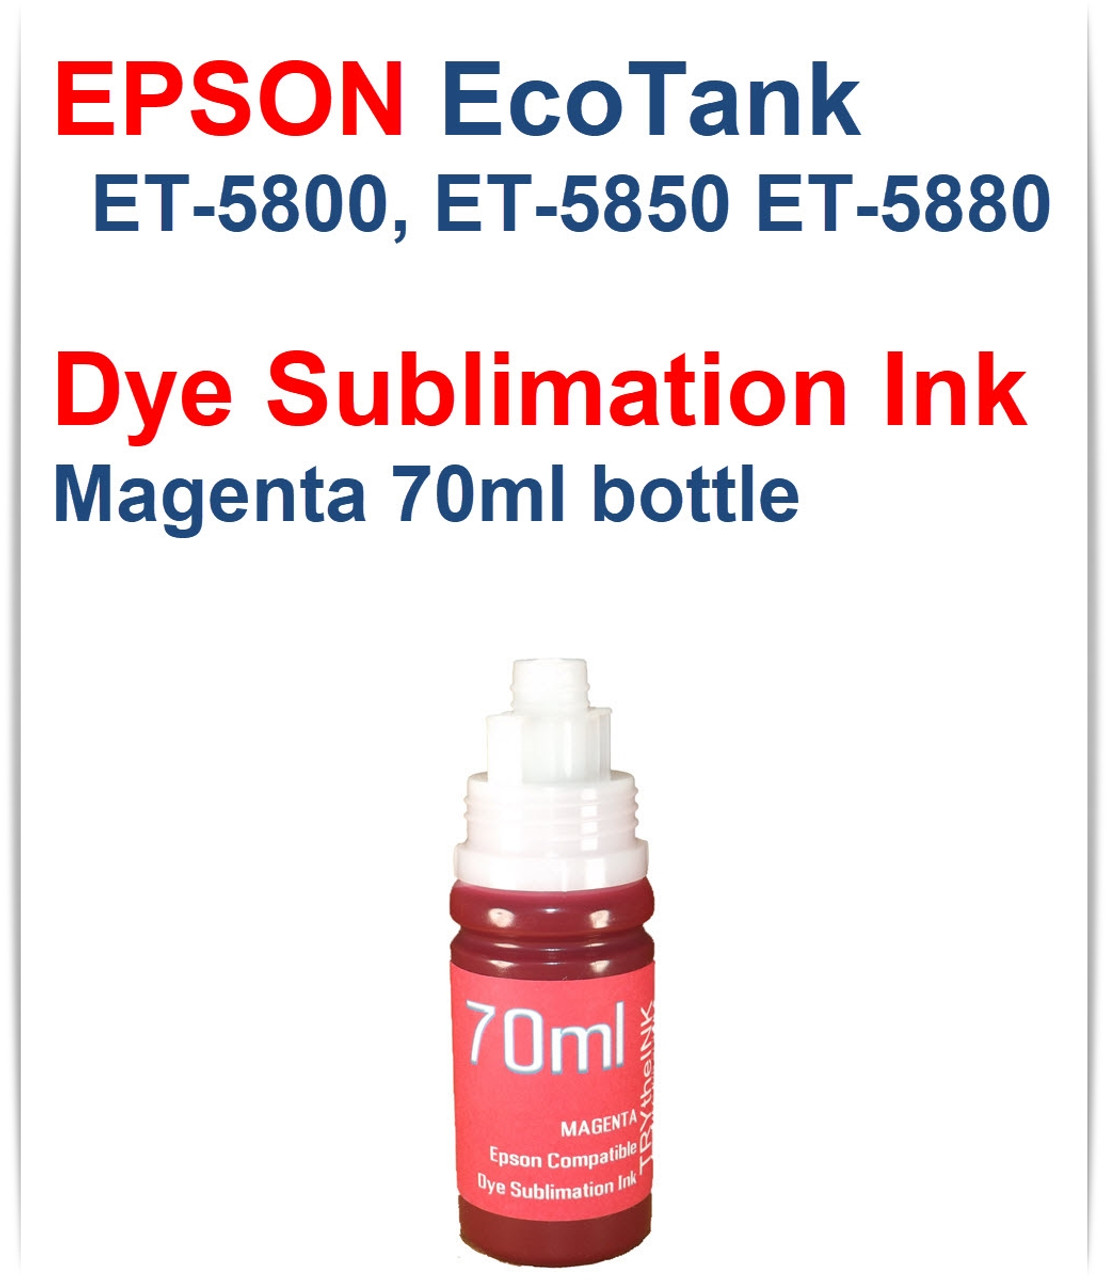 Magenta 70ml bottle EPSON EcoTank ET-5800 ET-5850 ET-5880 Printer Dye Sublimation Bottle Ink